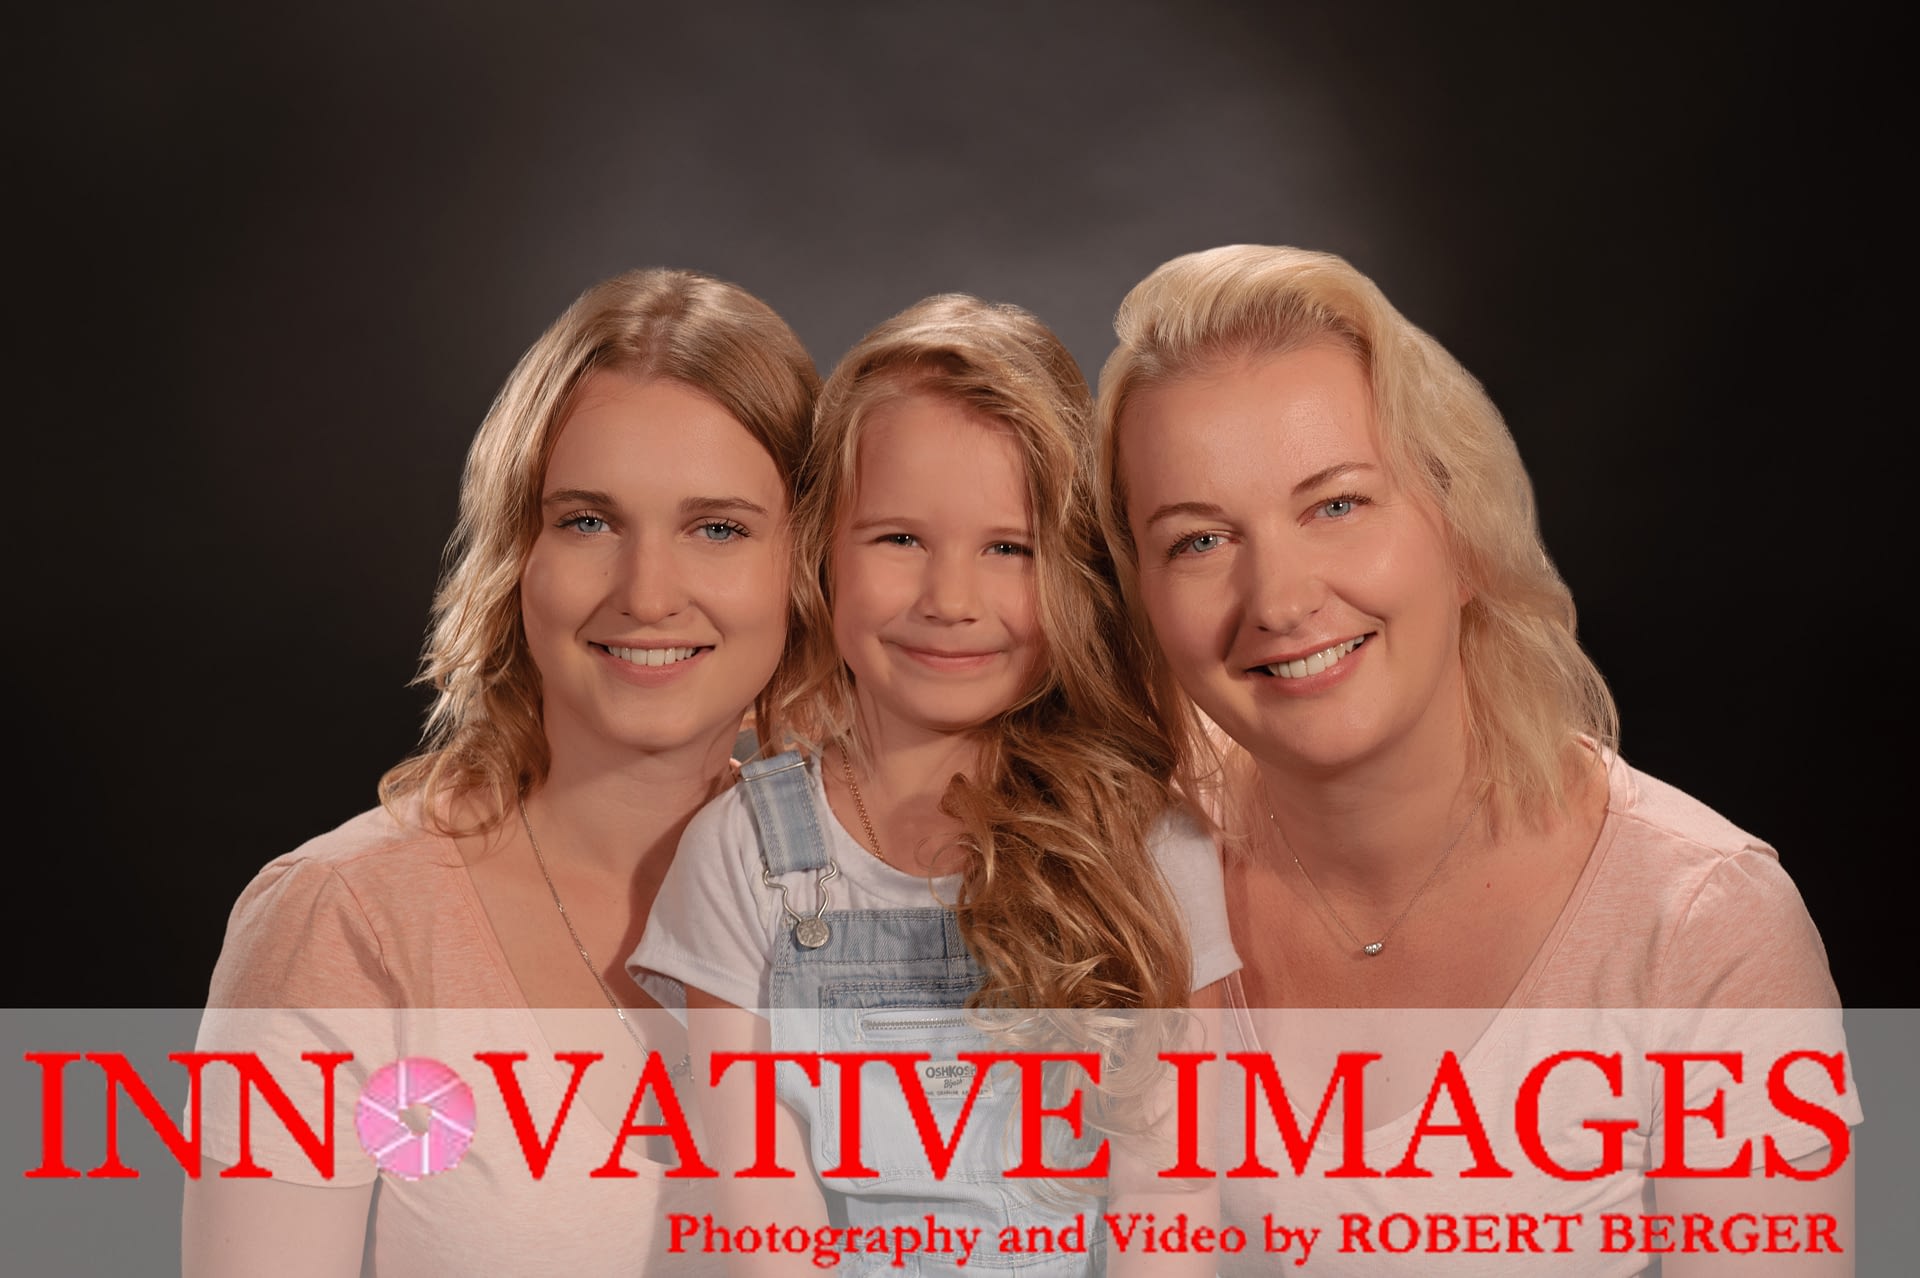 Houston Family Portrait Photographer Studio, Portraits of Character by Robert Berger